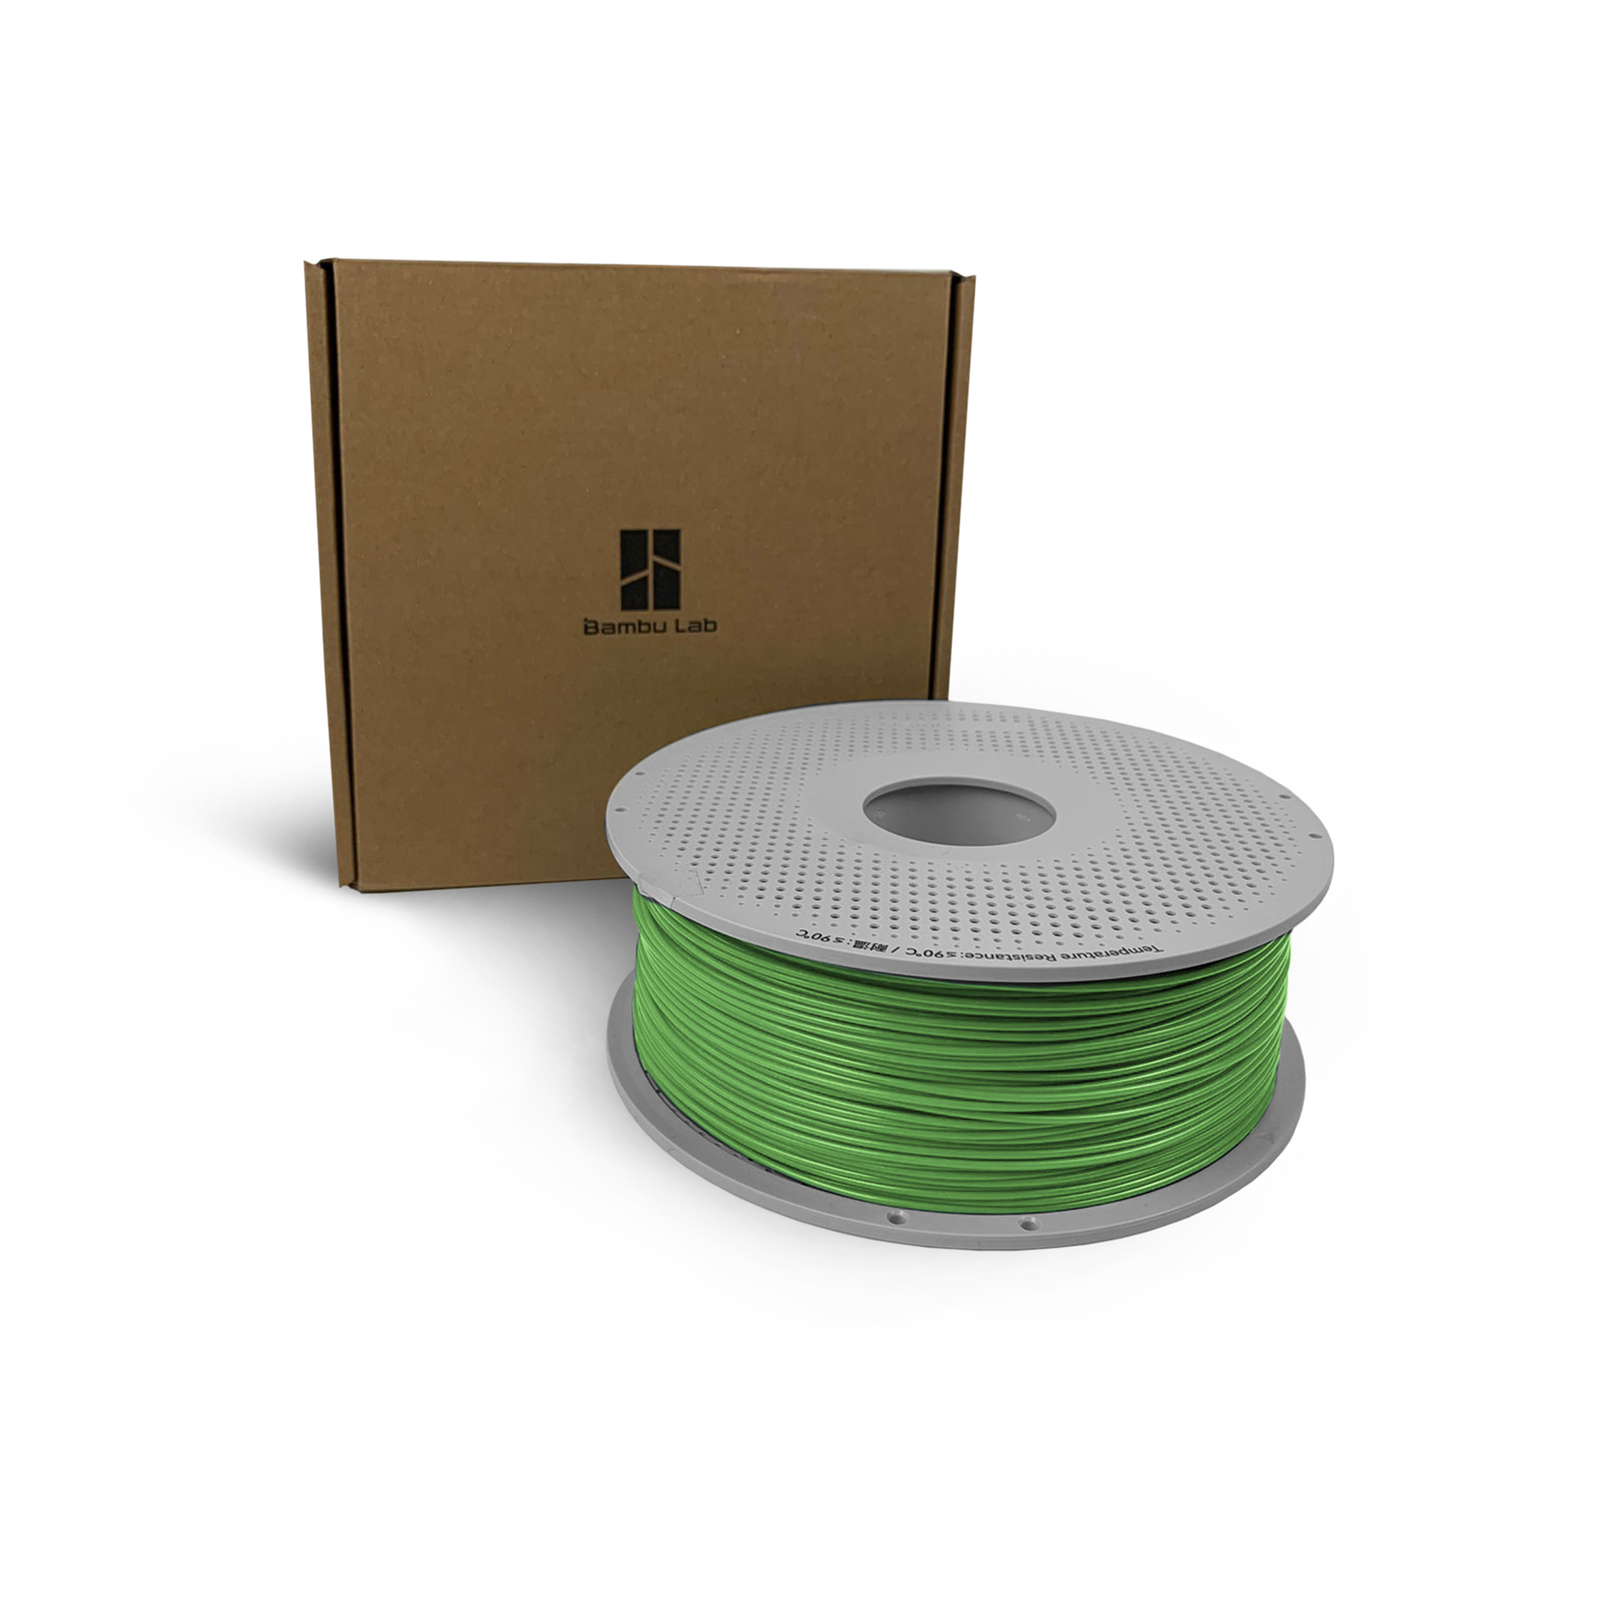 Matcha Green PLA-CF Filament from 3D Printer Gear